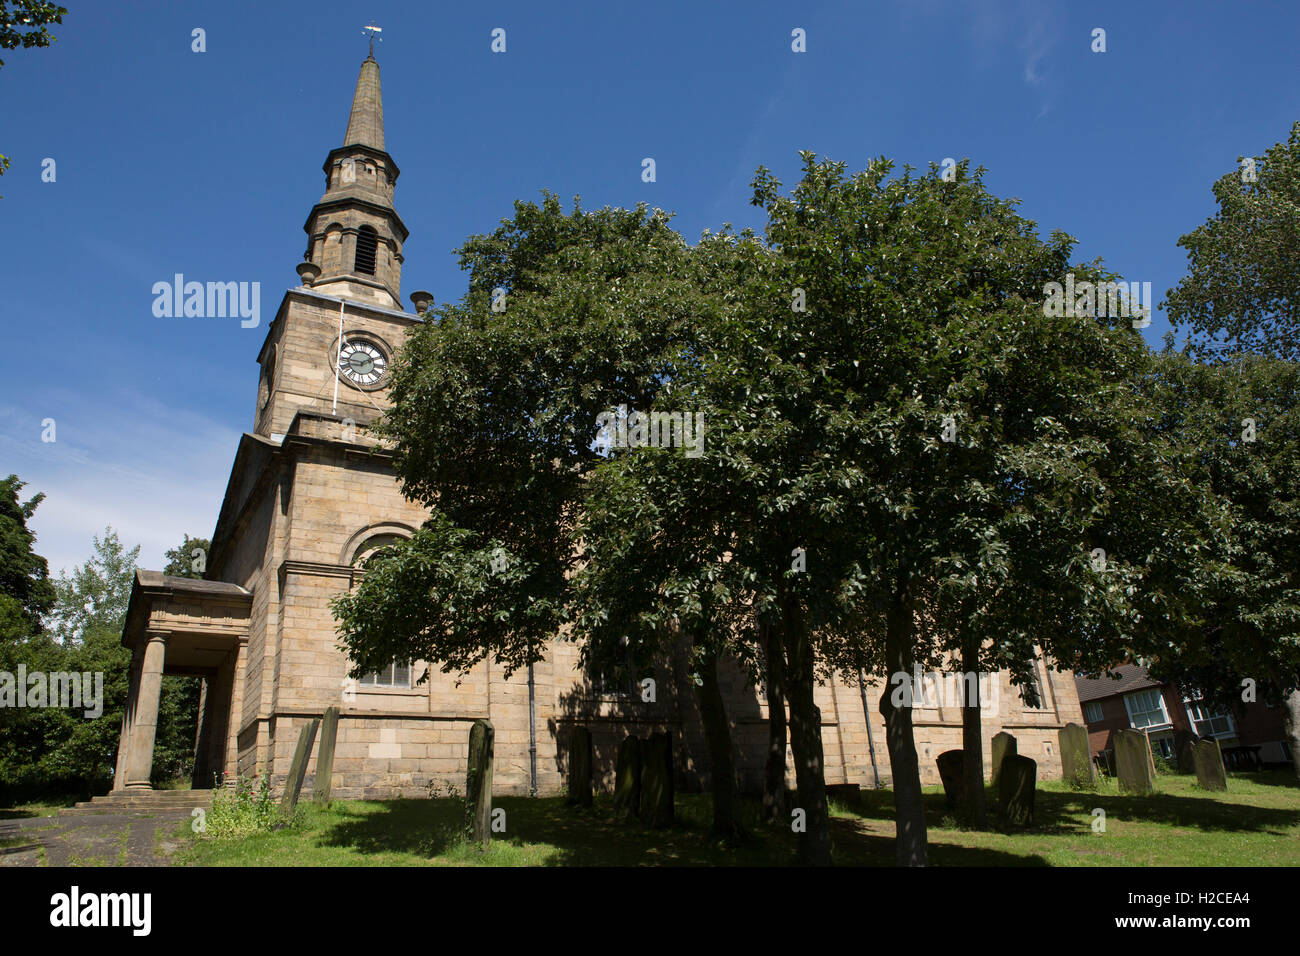 St Ann's Church in Newcastle-upon-Tyne, England. Stock Photo